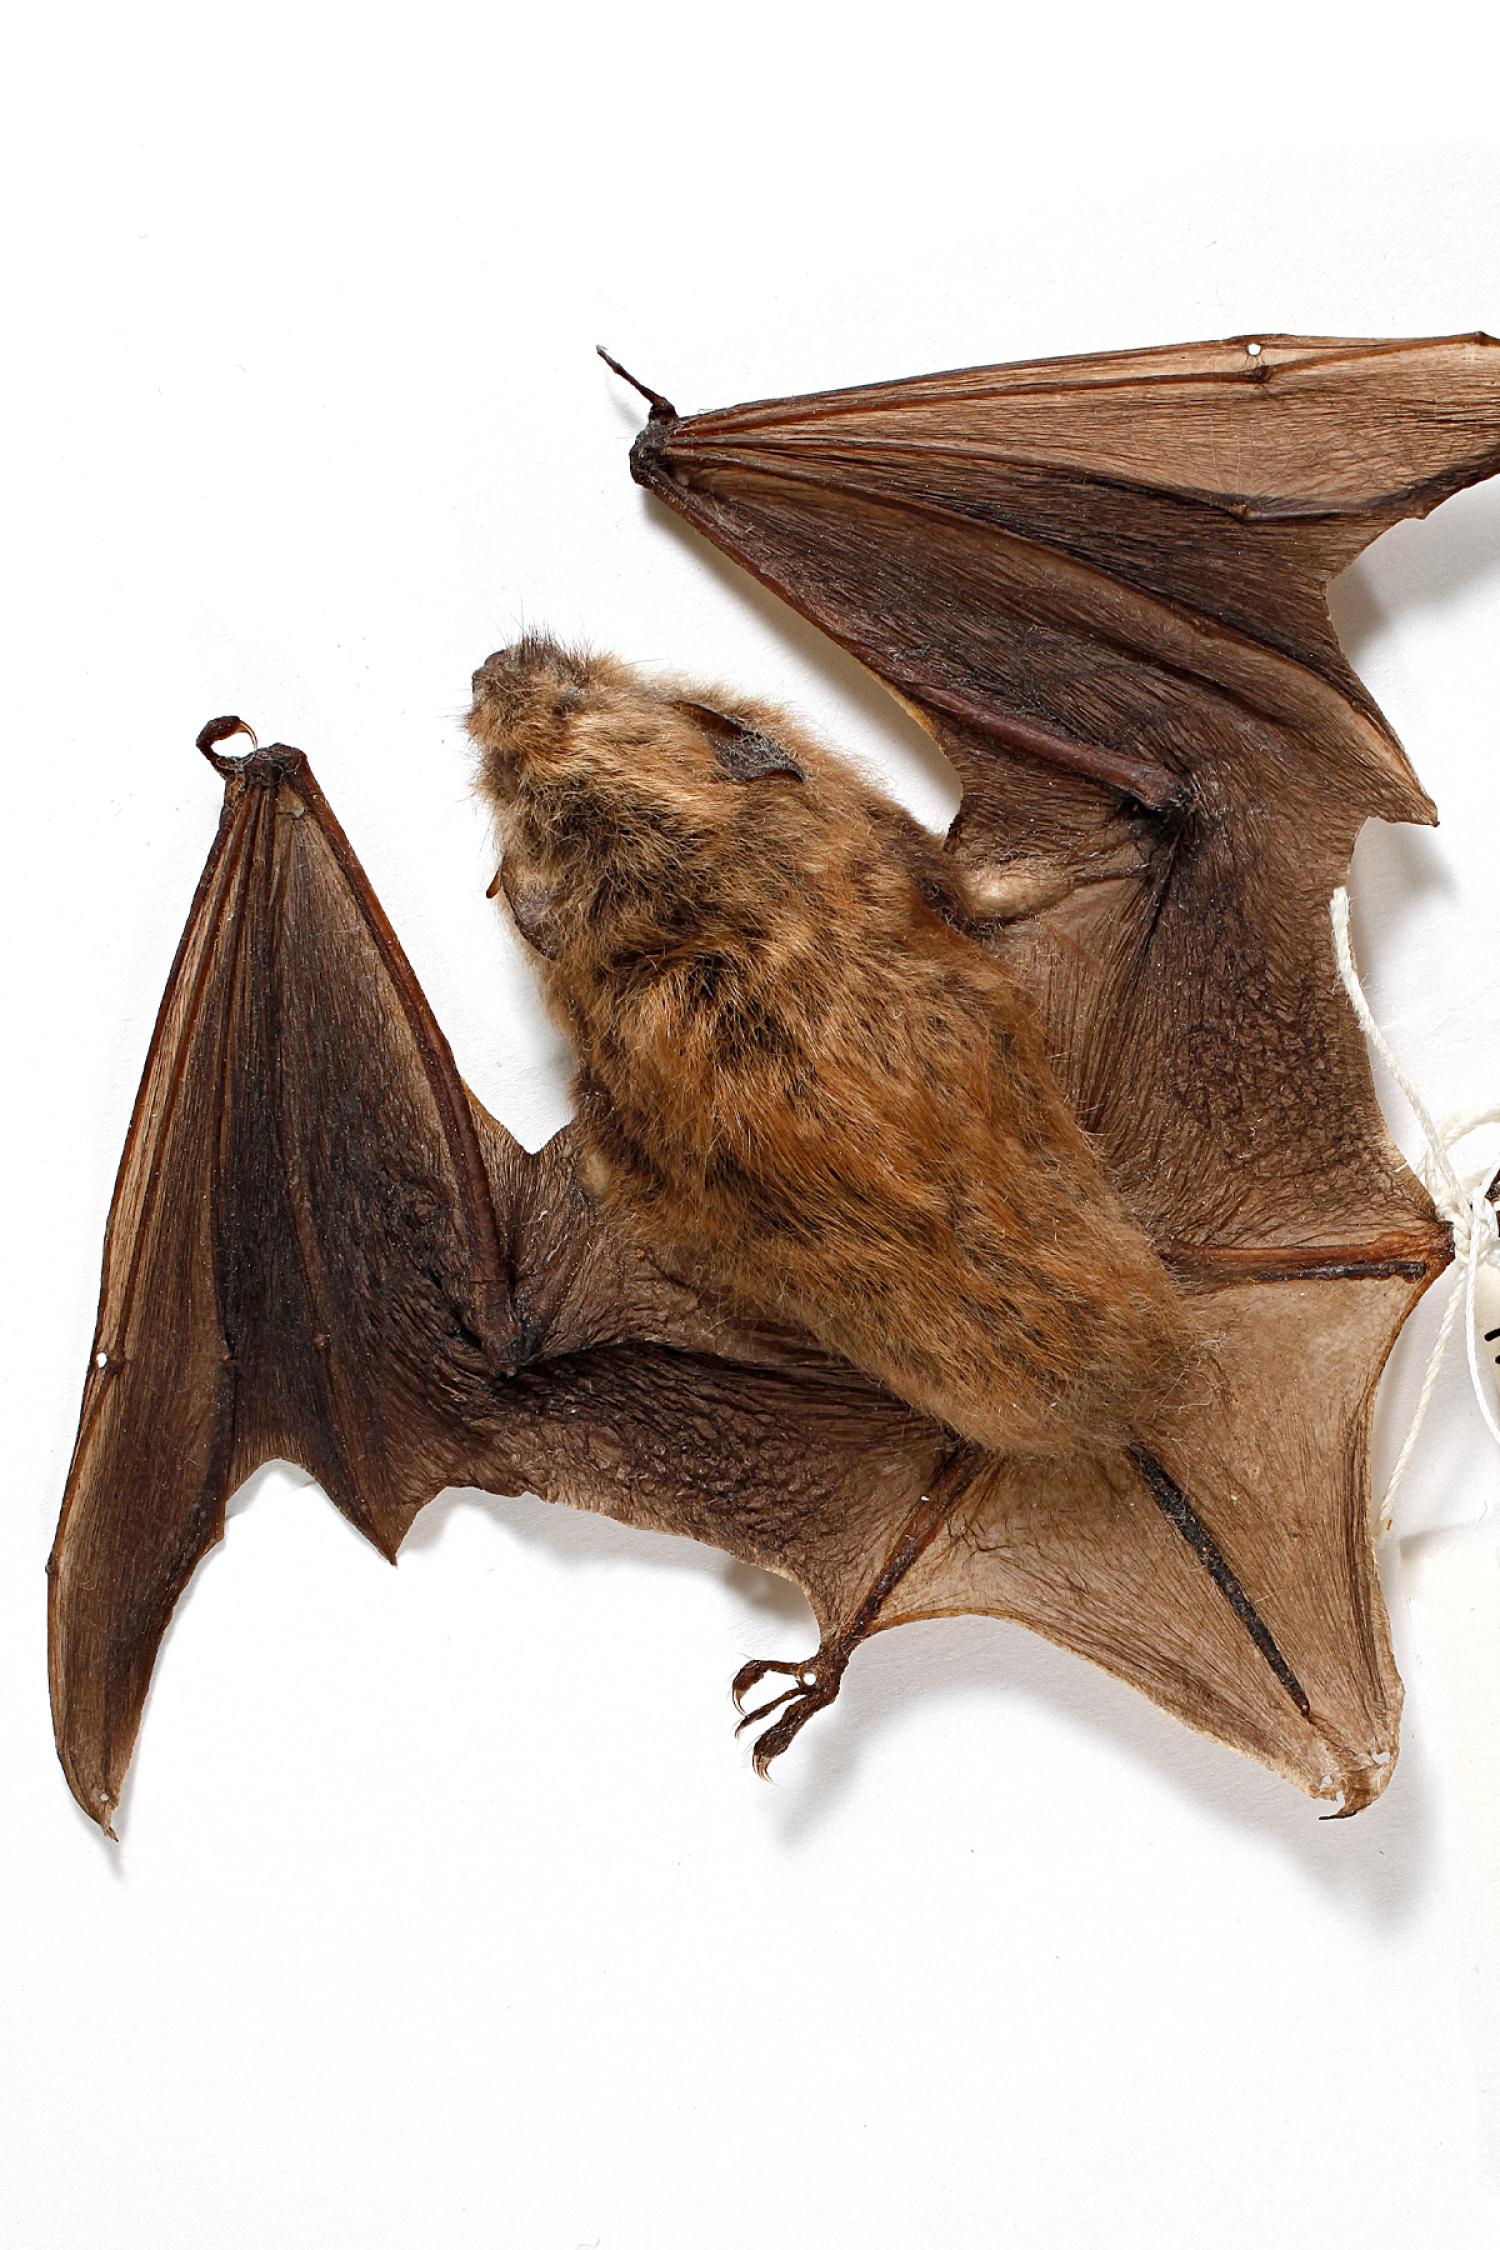 Little brown bat (Myotis lucifugus carissima)